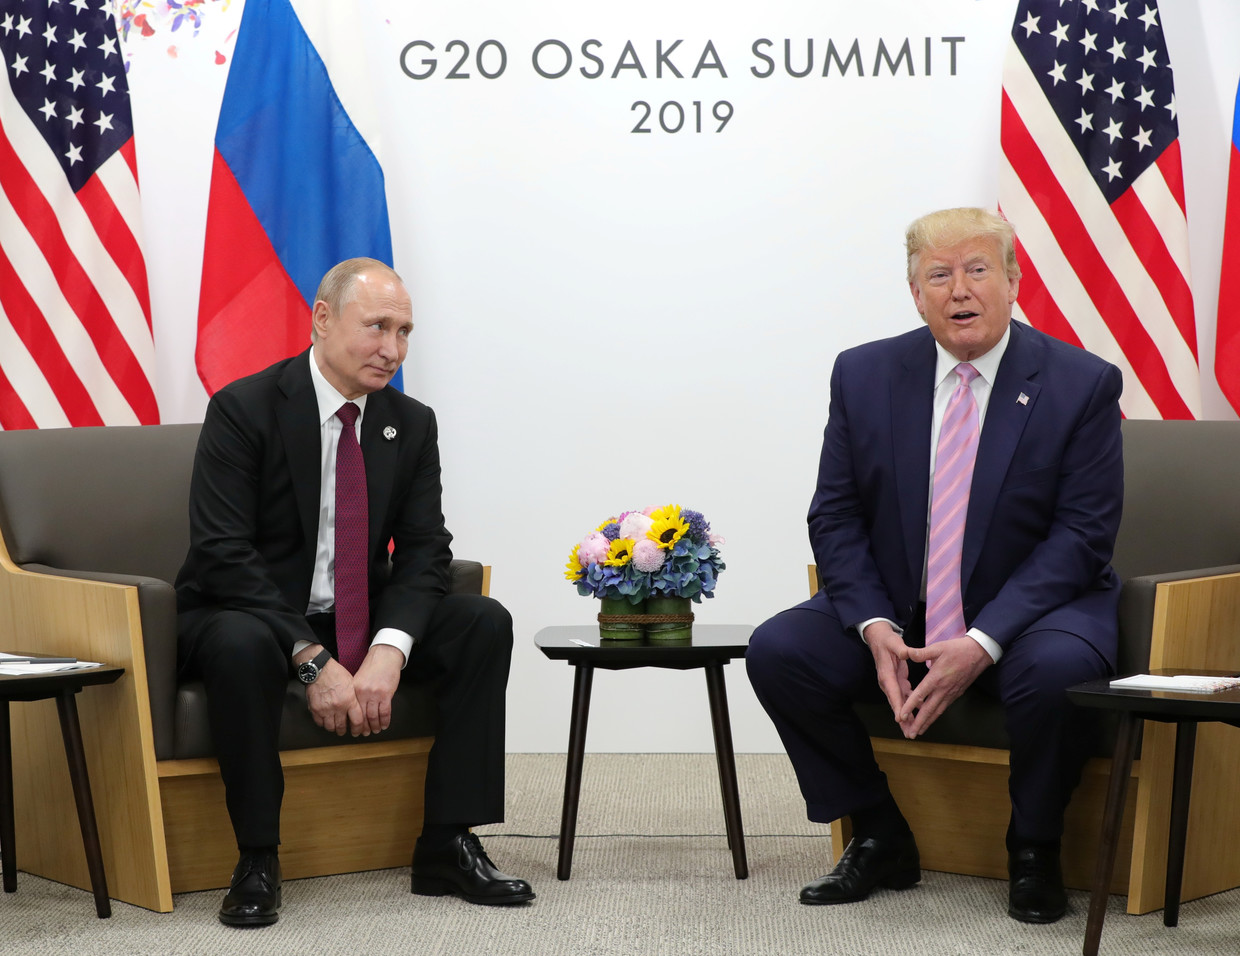 Vladimir Putin and Donald Trump at G20 summit